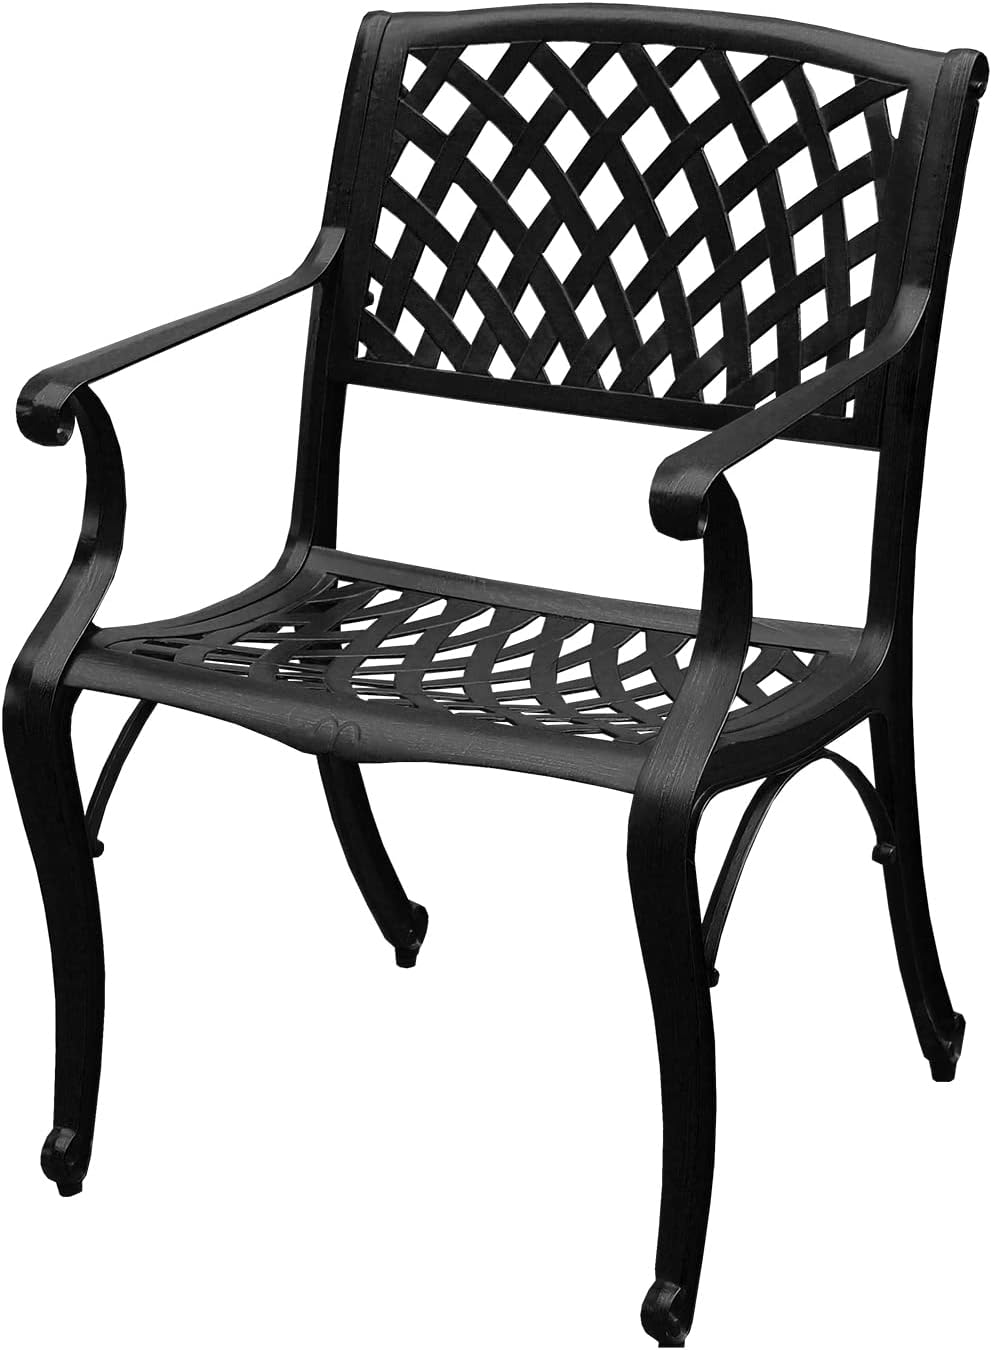 Oakland Living Modern Outdoor Mesh Cast Aluminum Black Patio Dining Chair